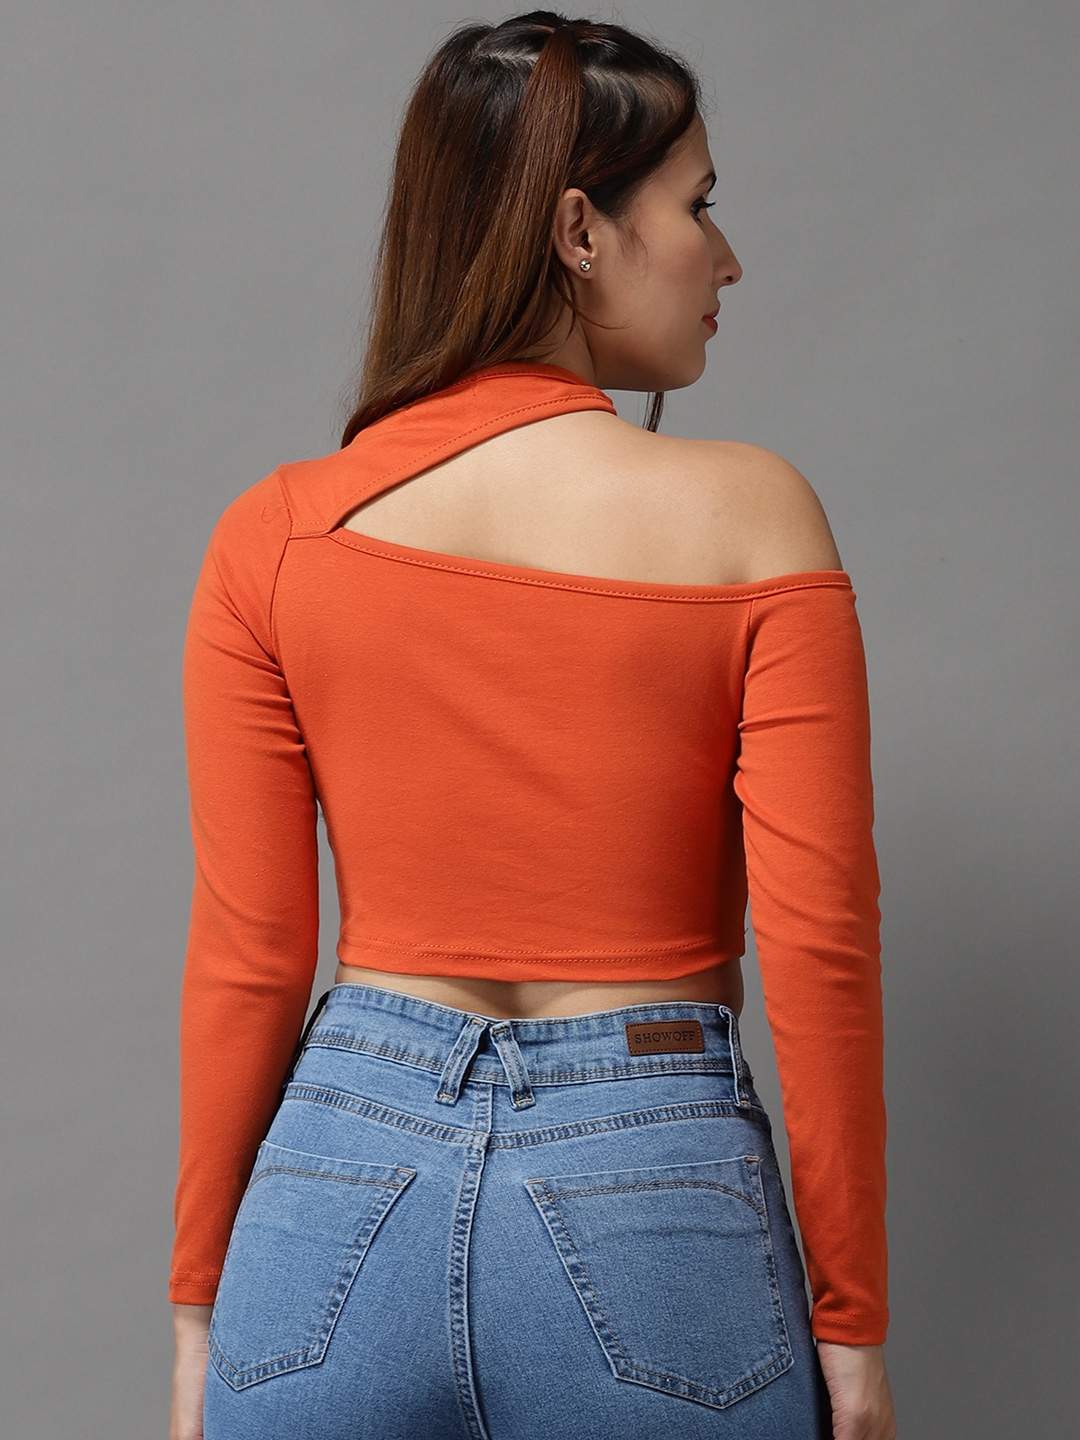 Women's Orange Cotton Blend Solid Crop Top